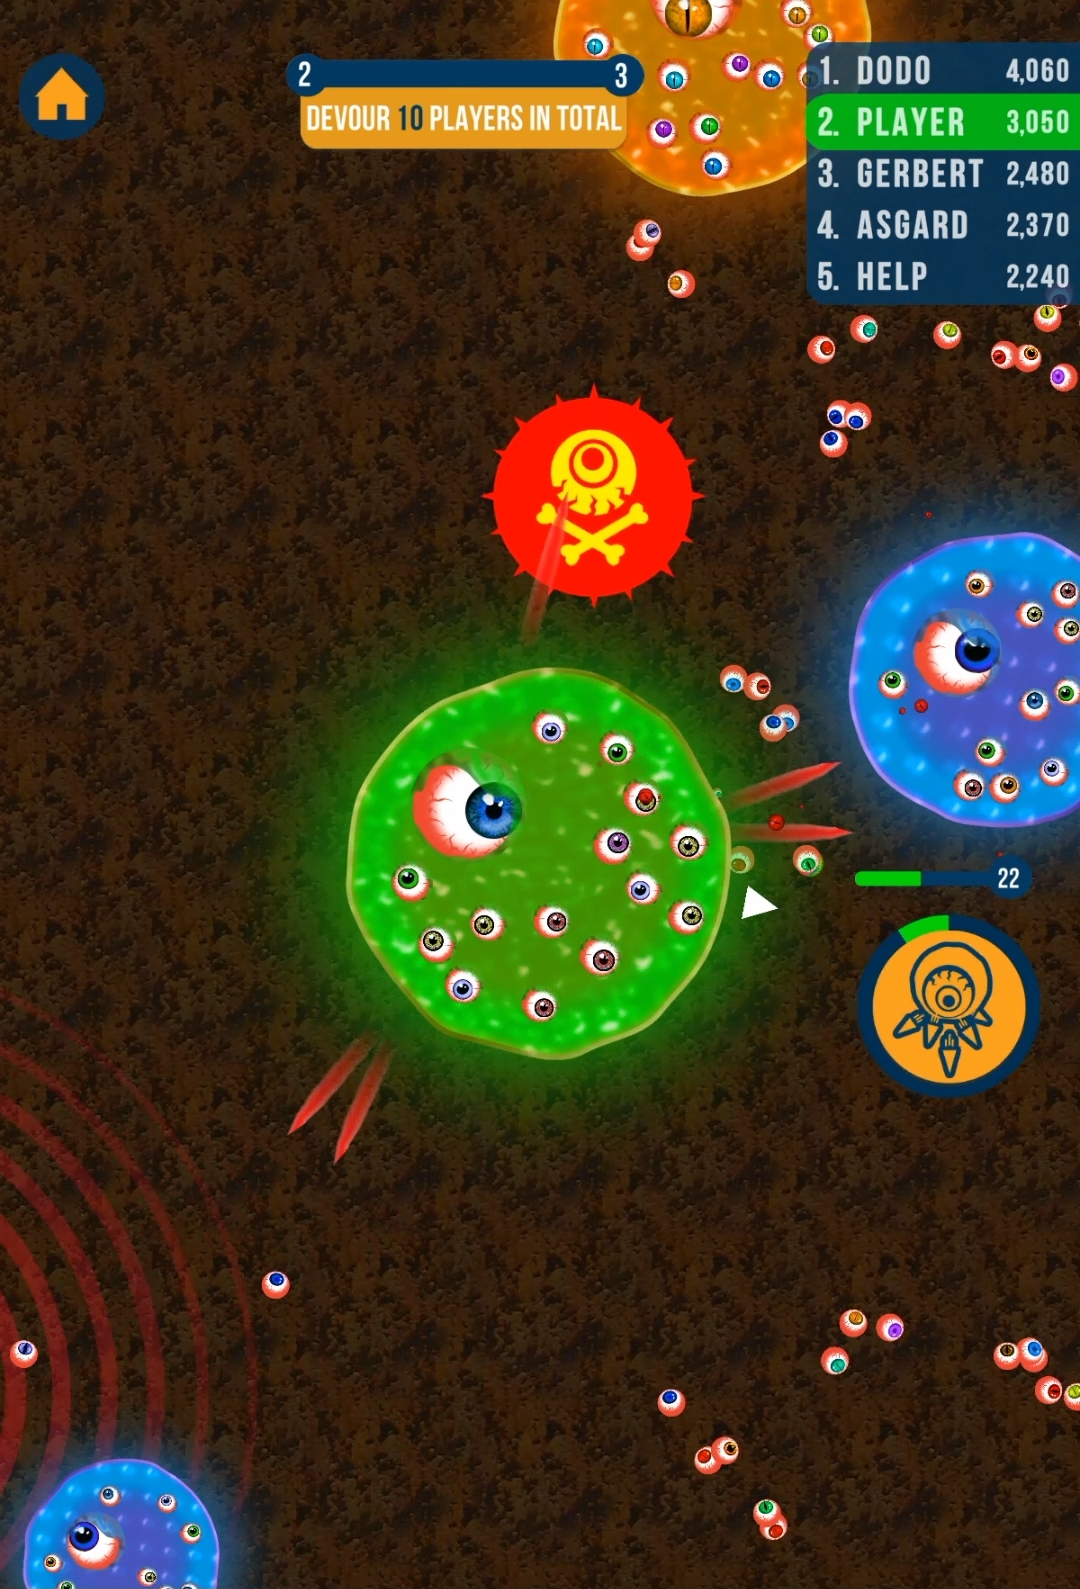 Blob.io - Multiplayer io games 25.3.0 Free Download